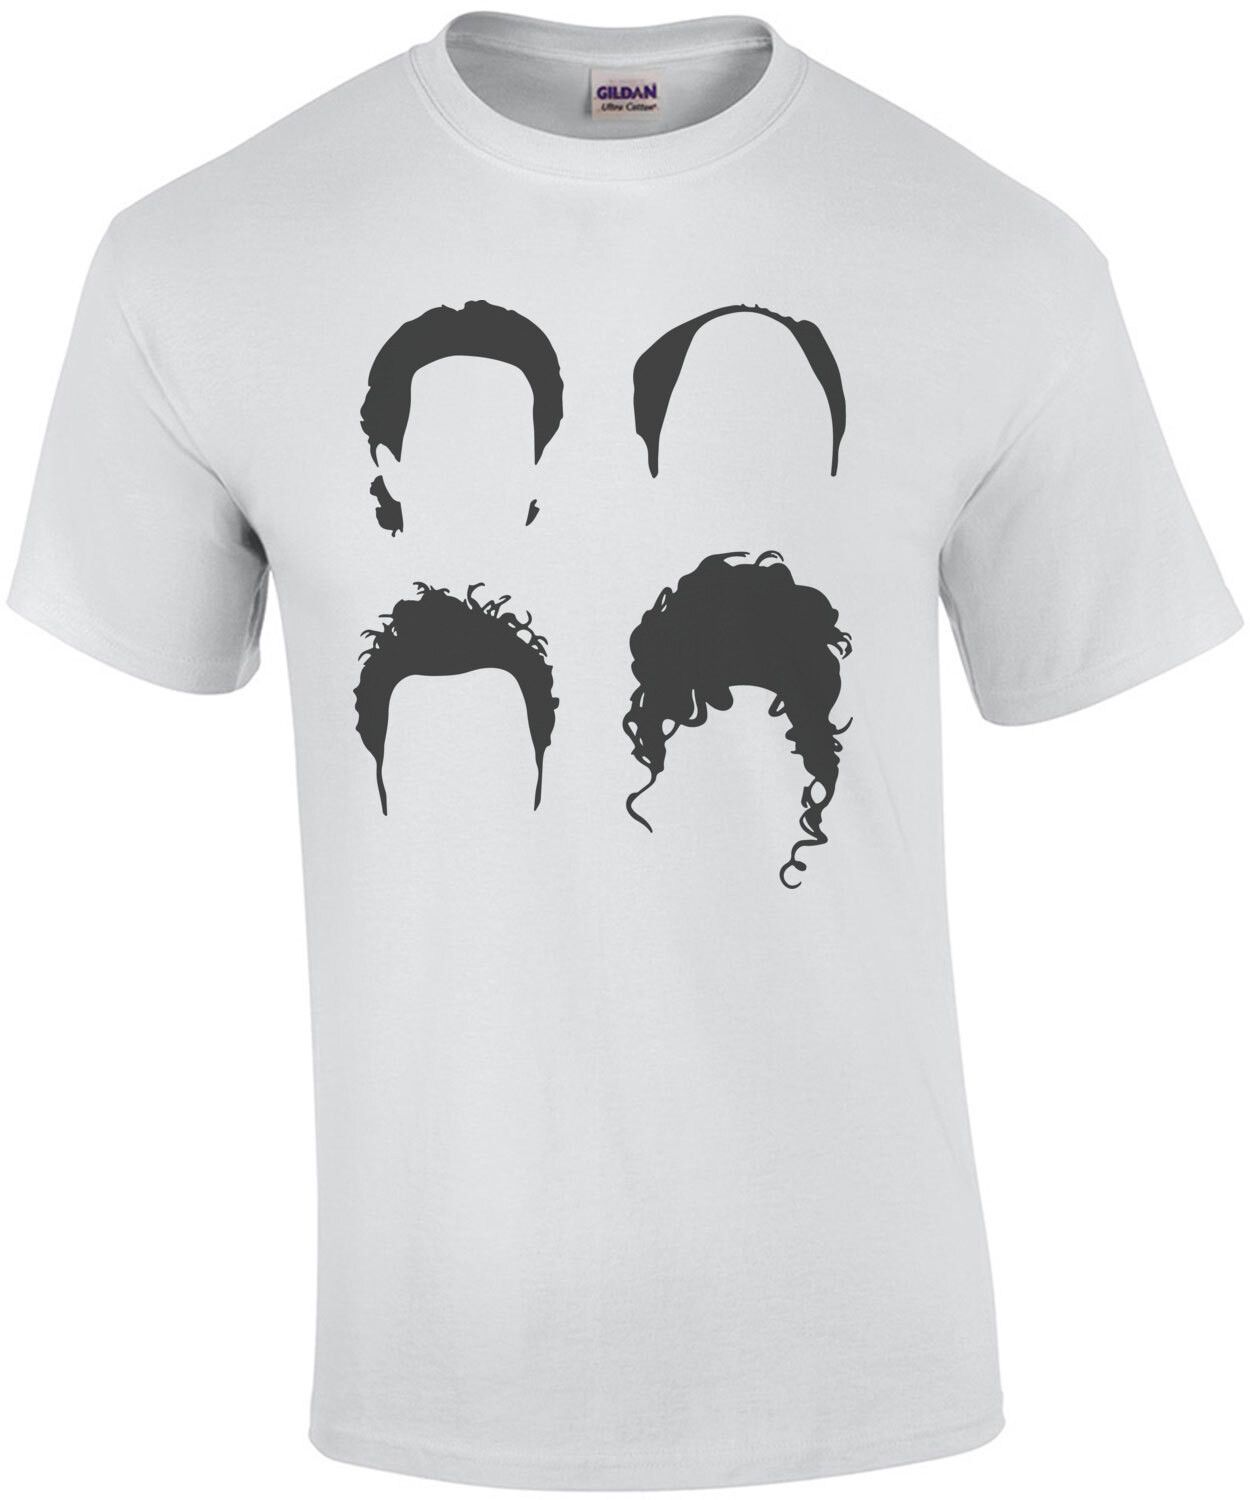 Seinfeld Hair - Seinfeld - 80's T-Shirt